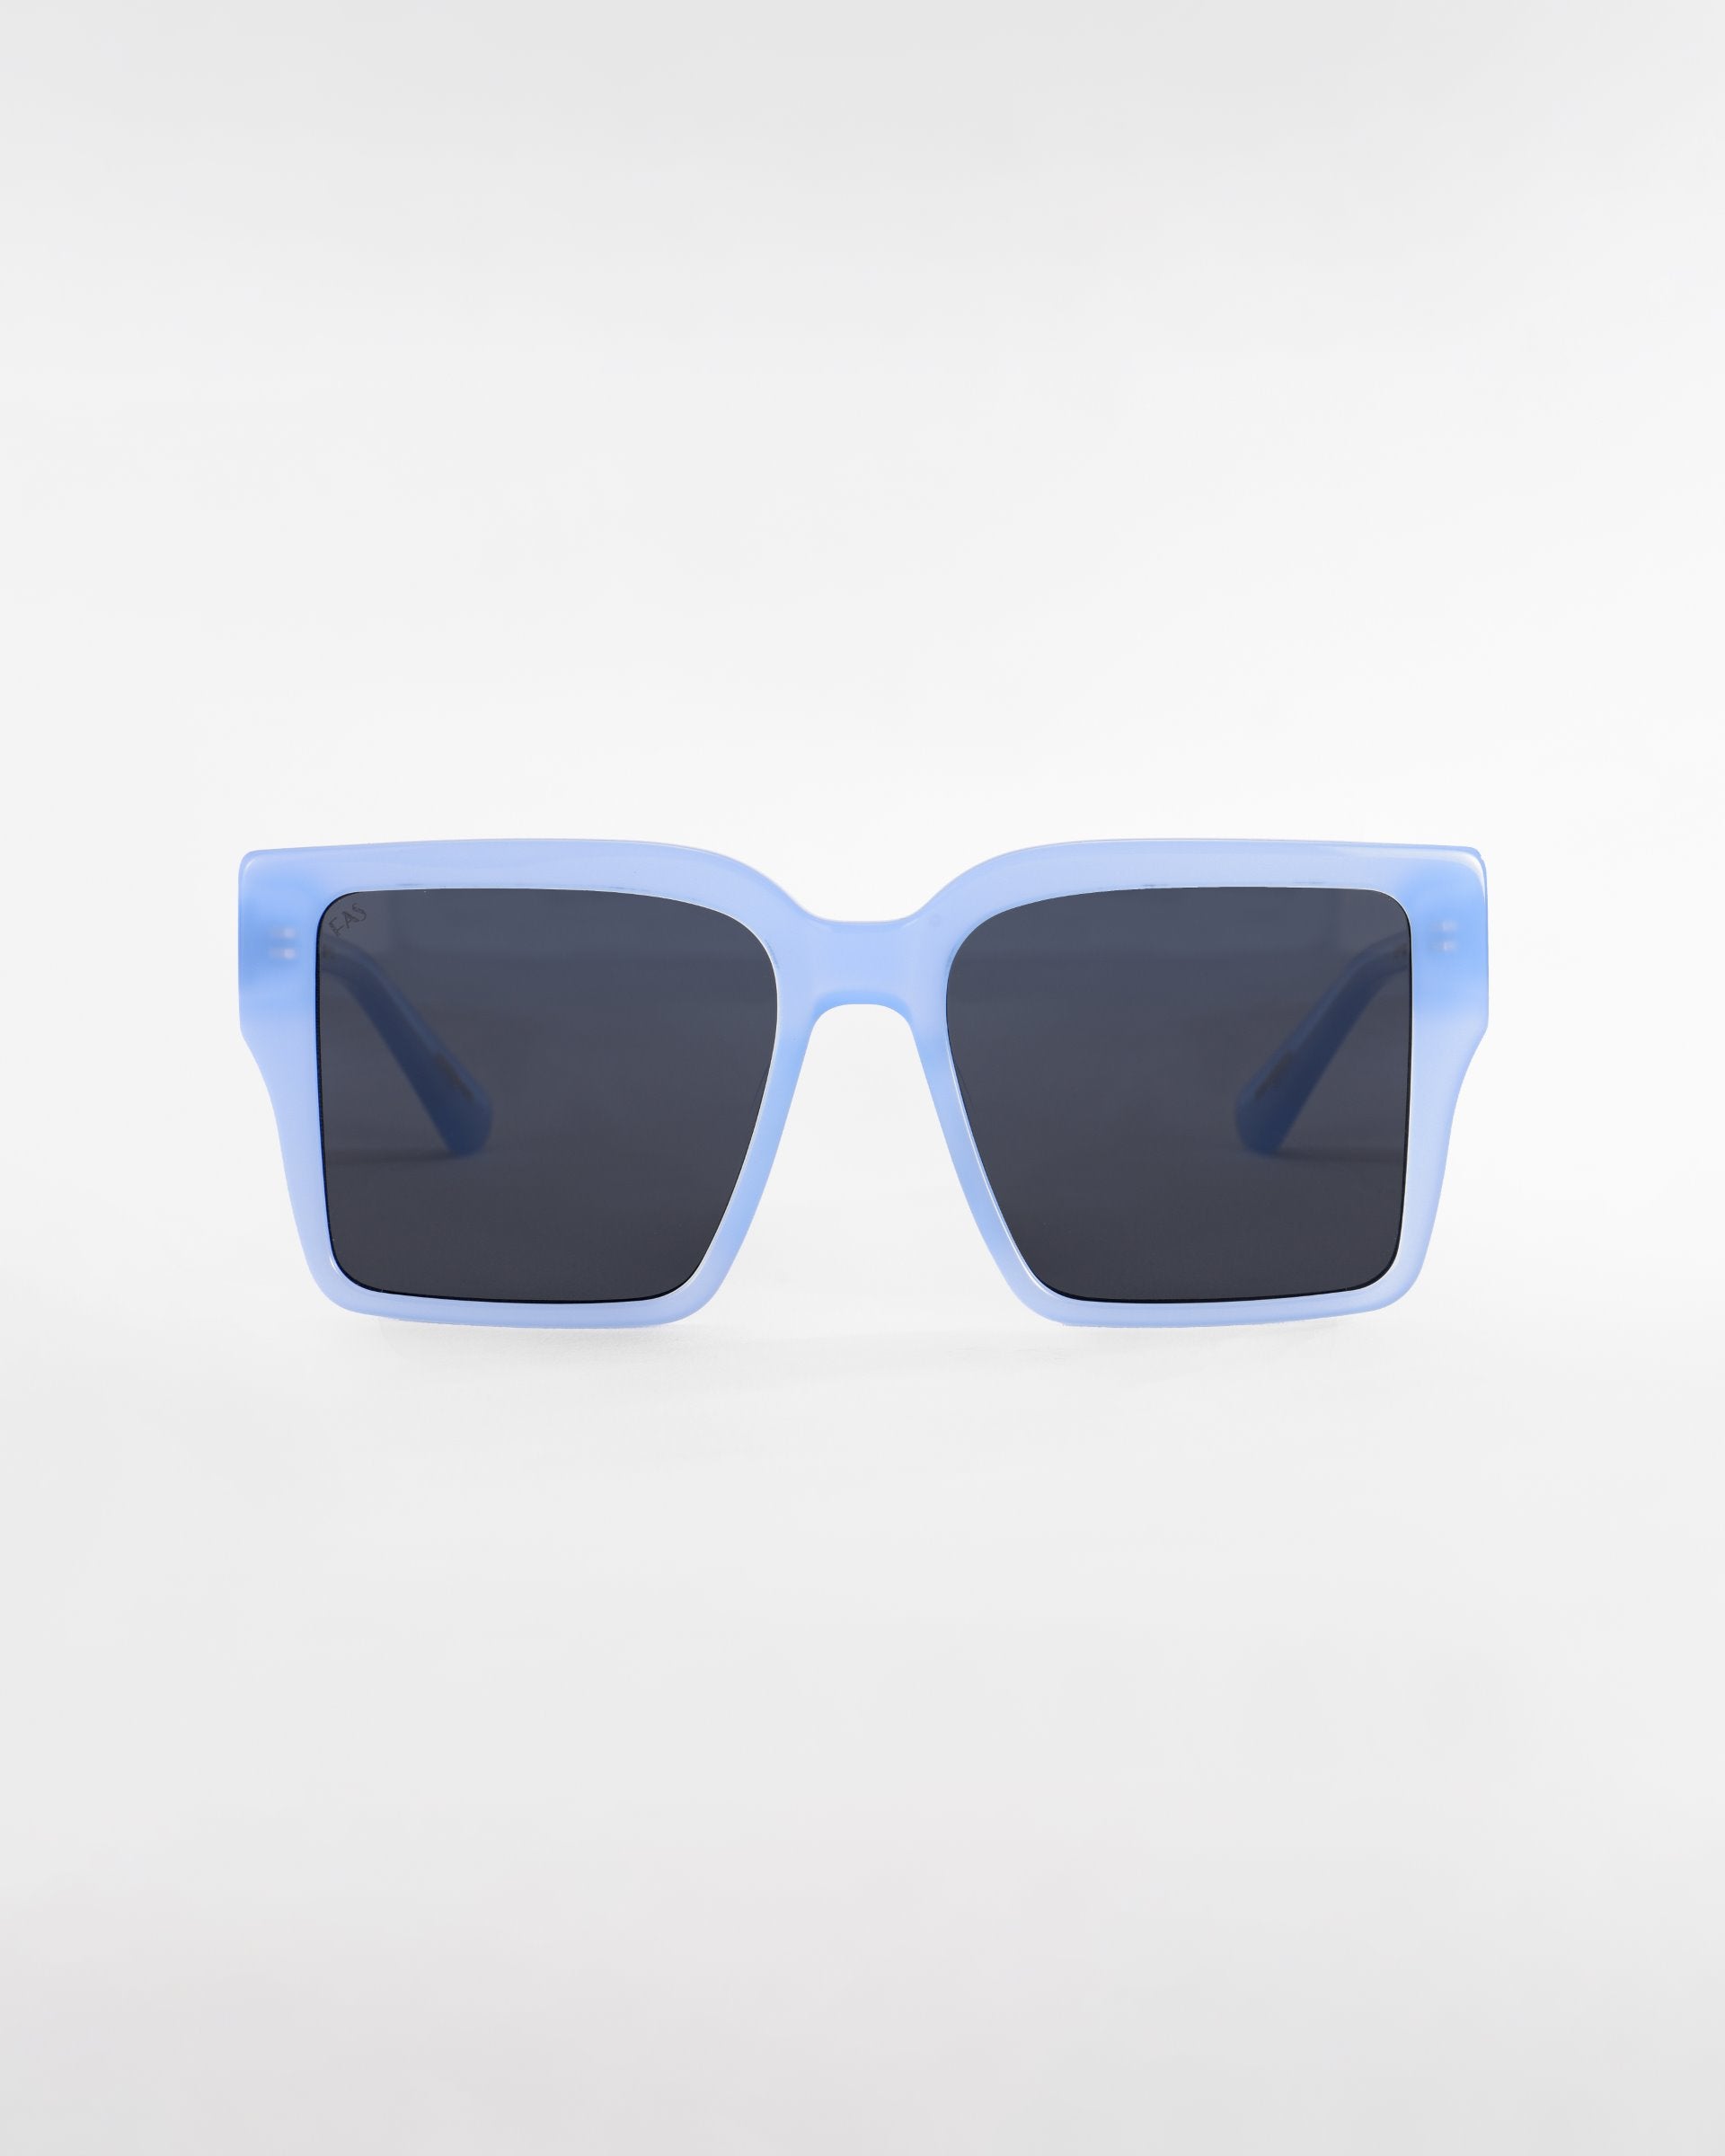 A pair of For Art's Sake® Castle oversized square-shaped sunglasses with light blue frames and ultra-lightweight dark lenses, centered against a plain white background.